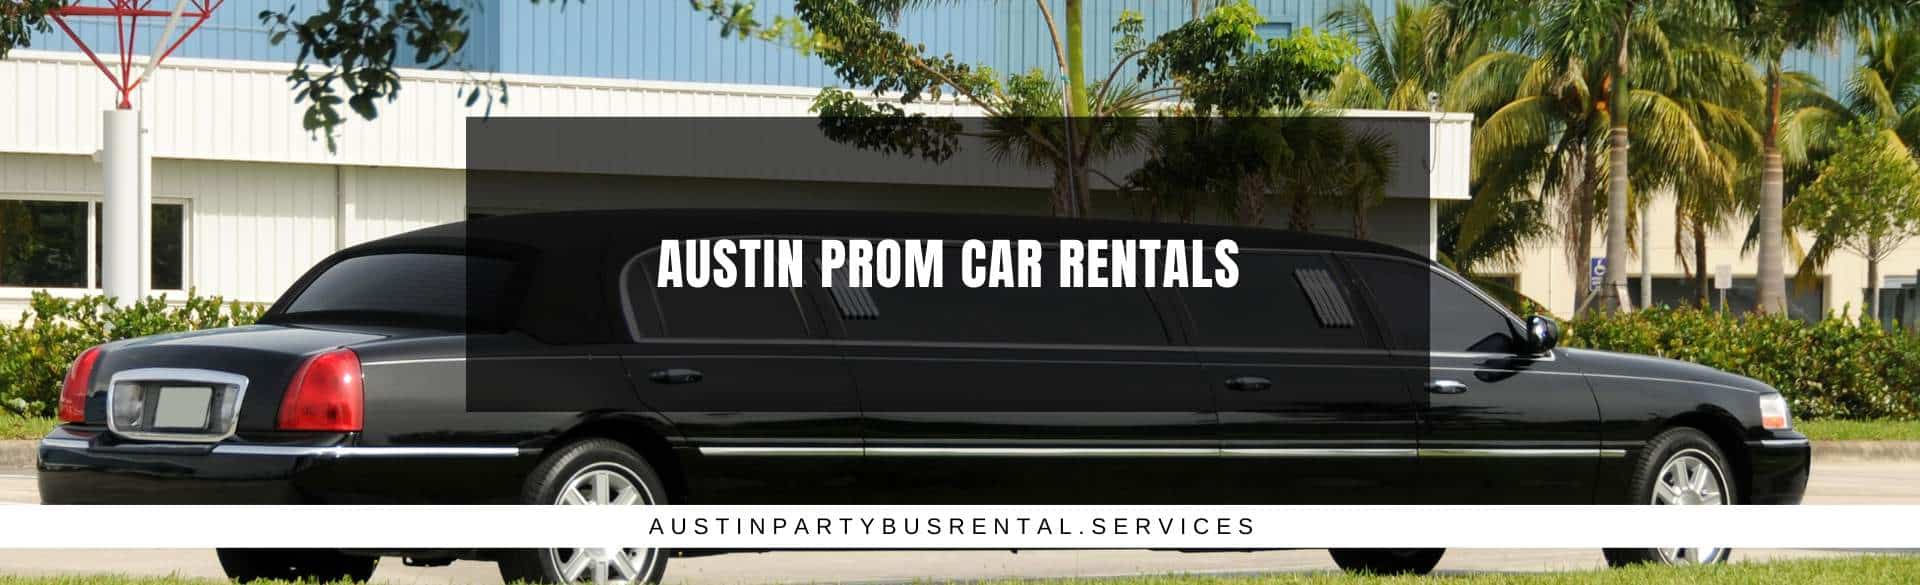 Austin Prom Car Rentals